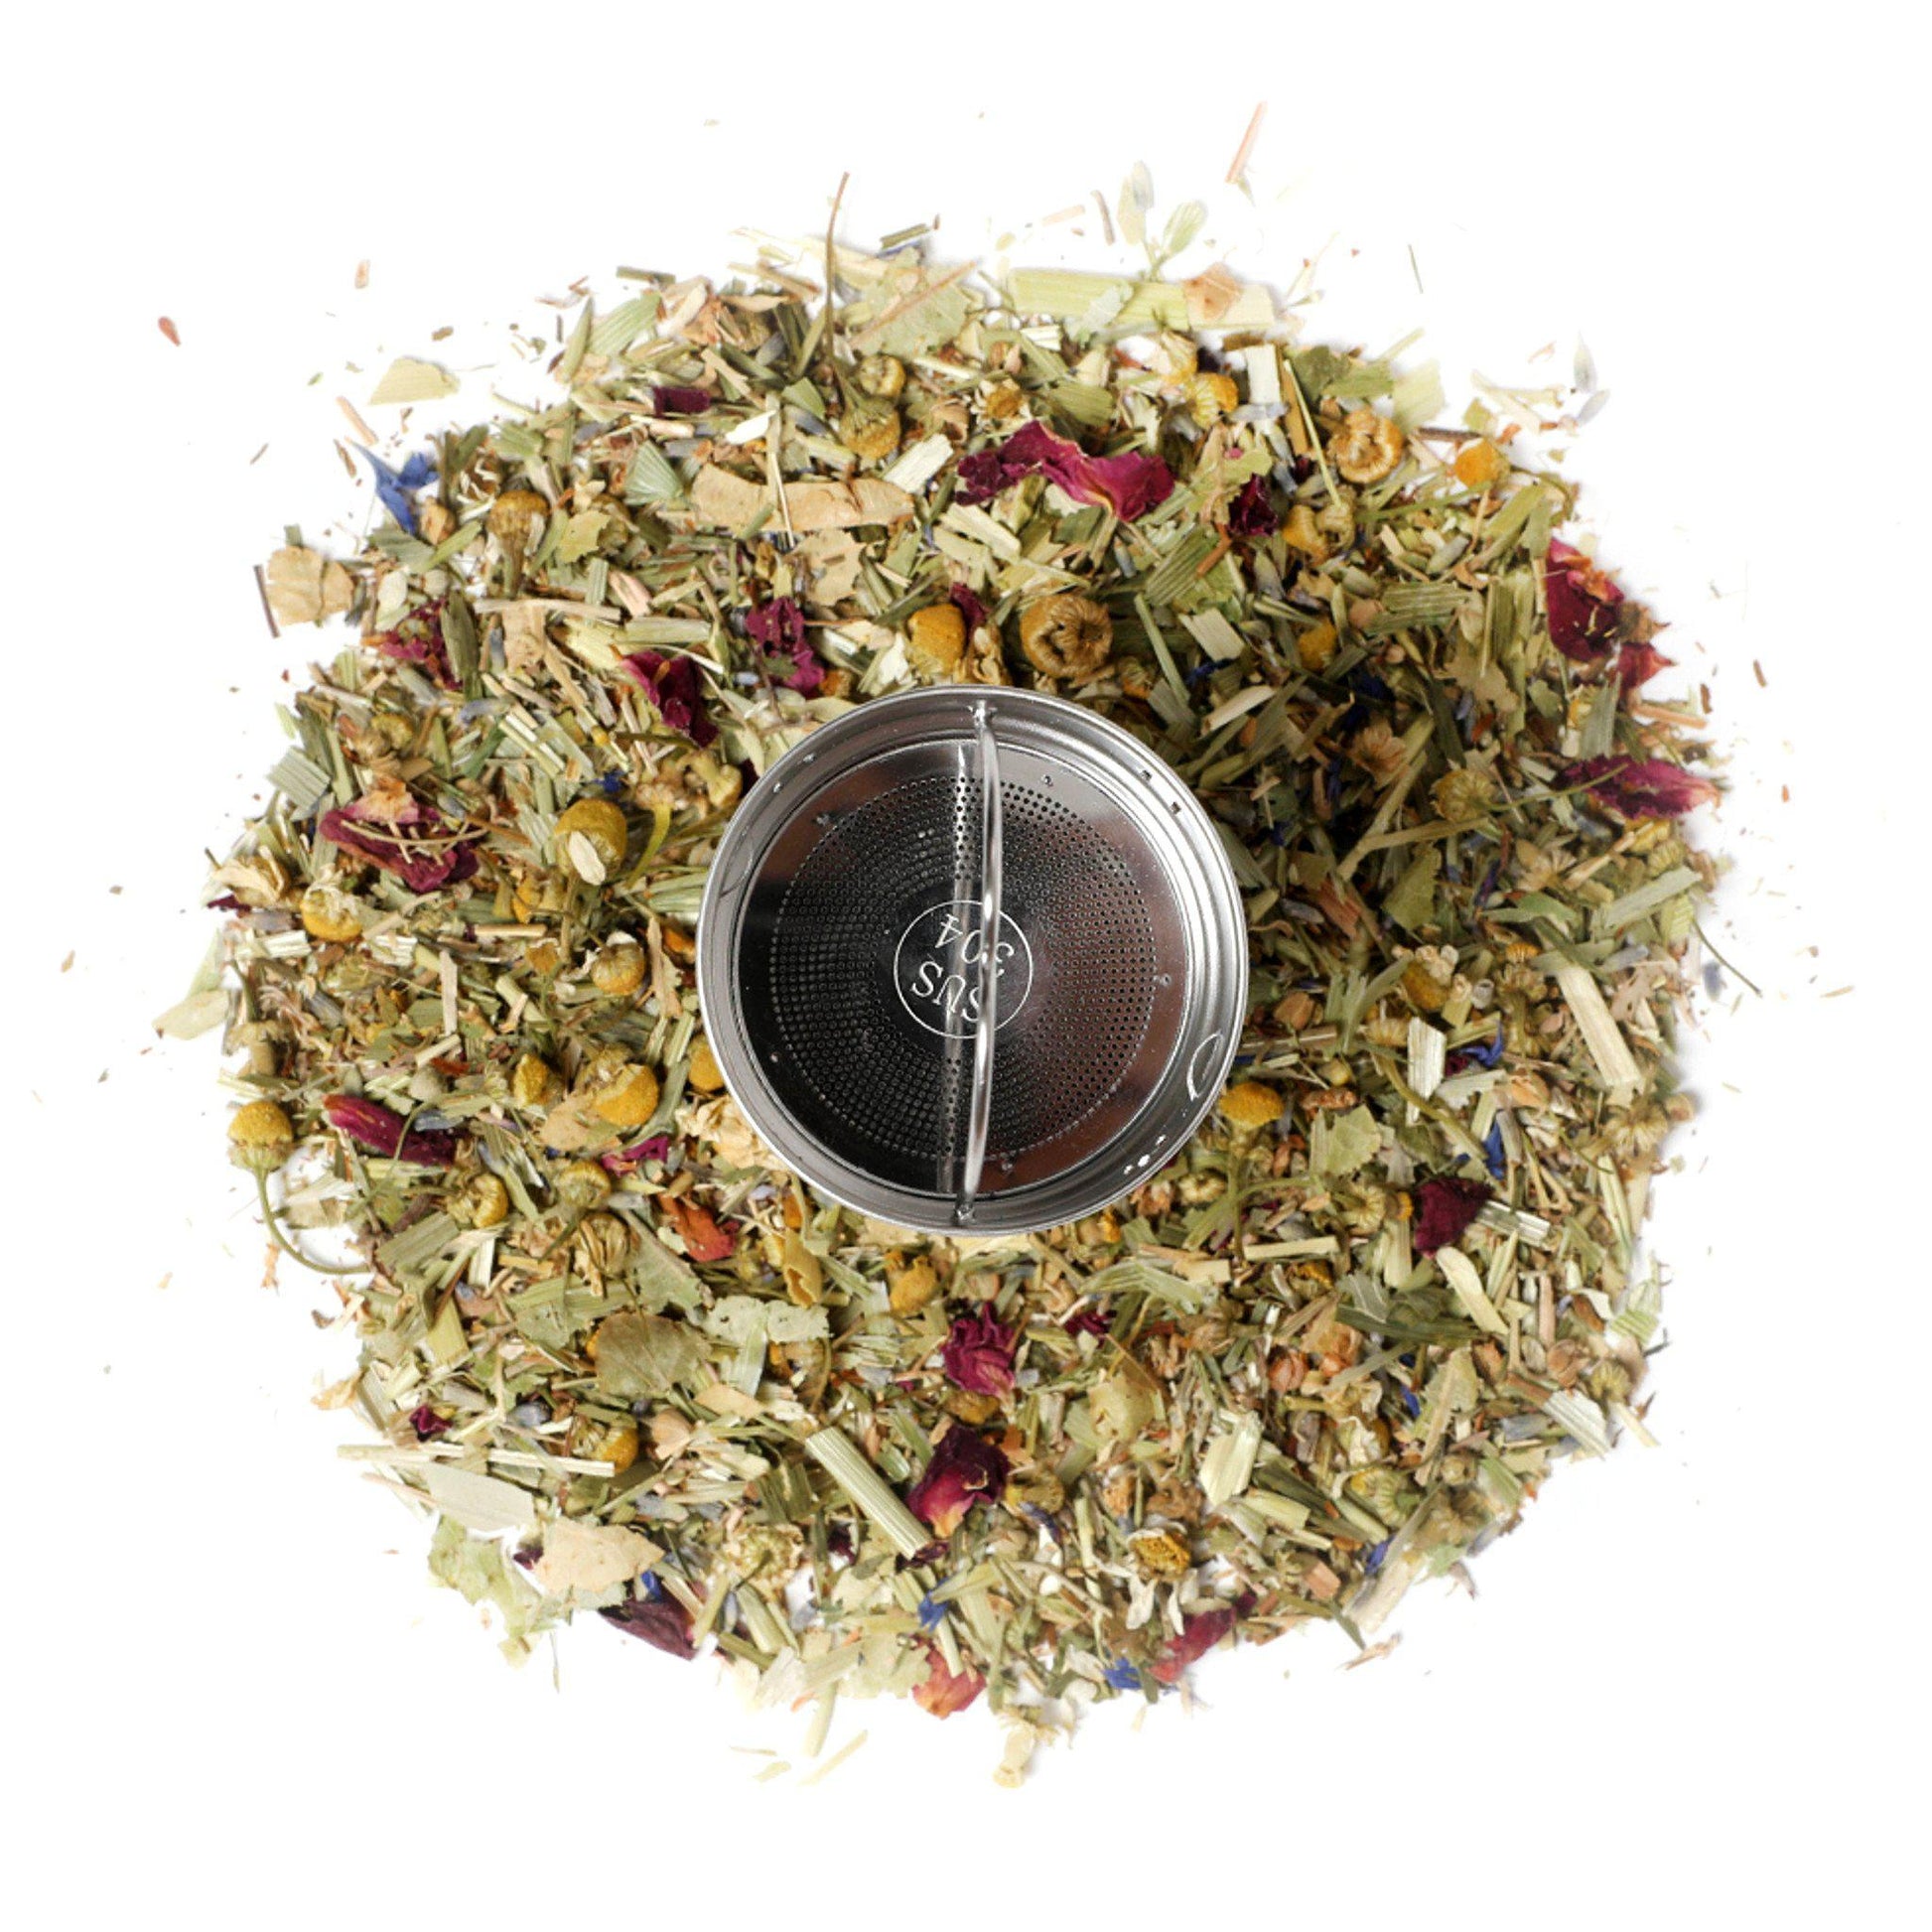 Kodu Chamomile Tea Gift Pack - Herbal Loose Leaf Tea - mykodu